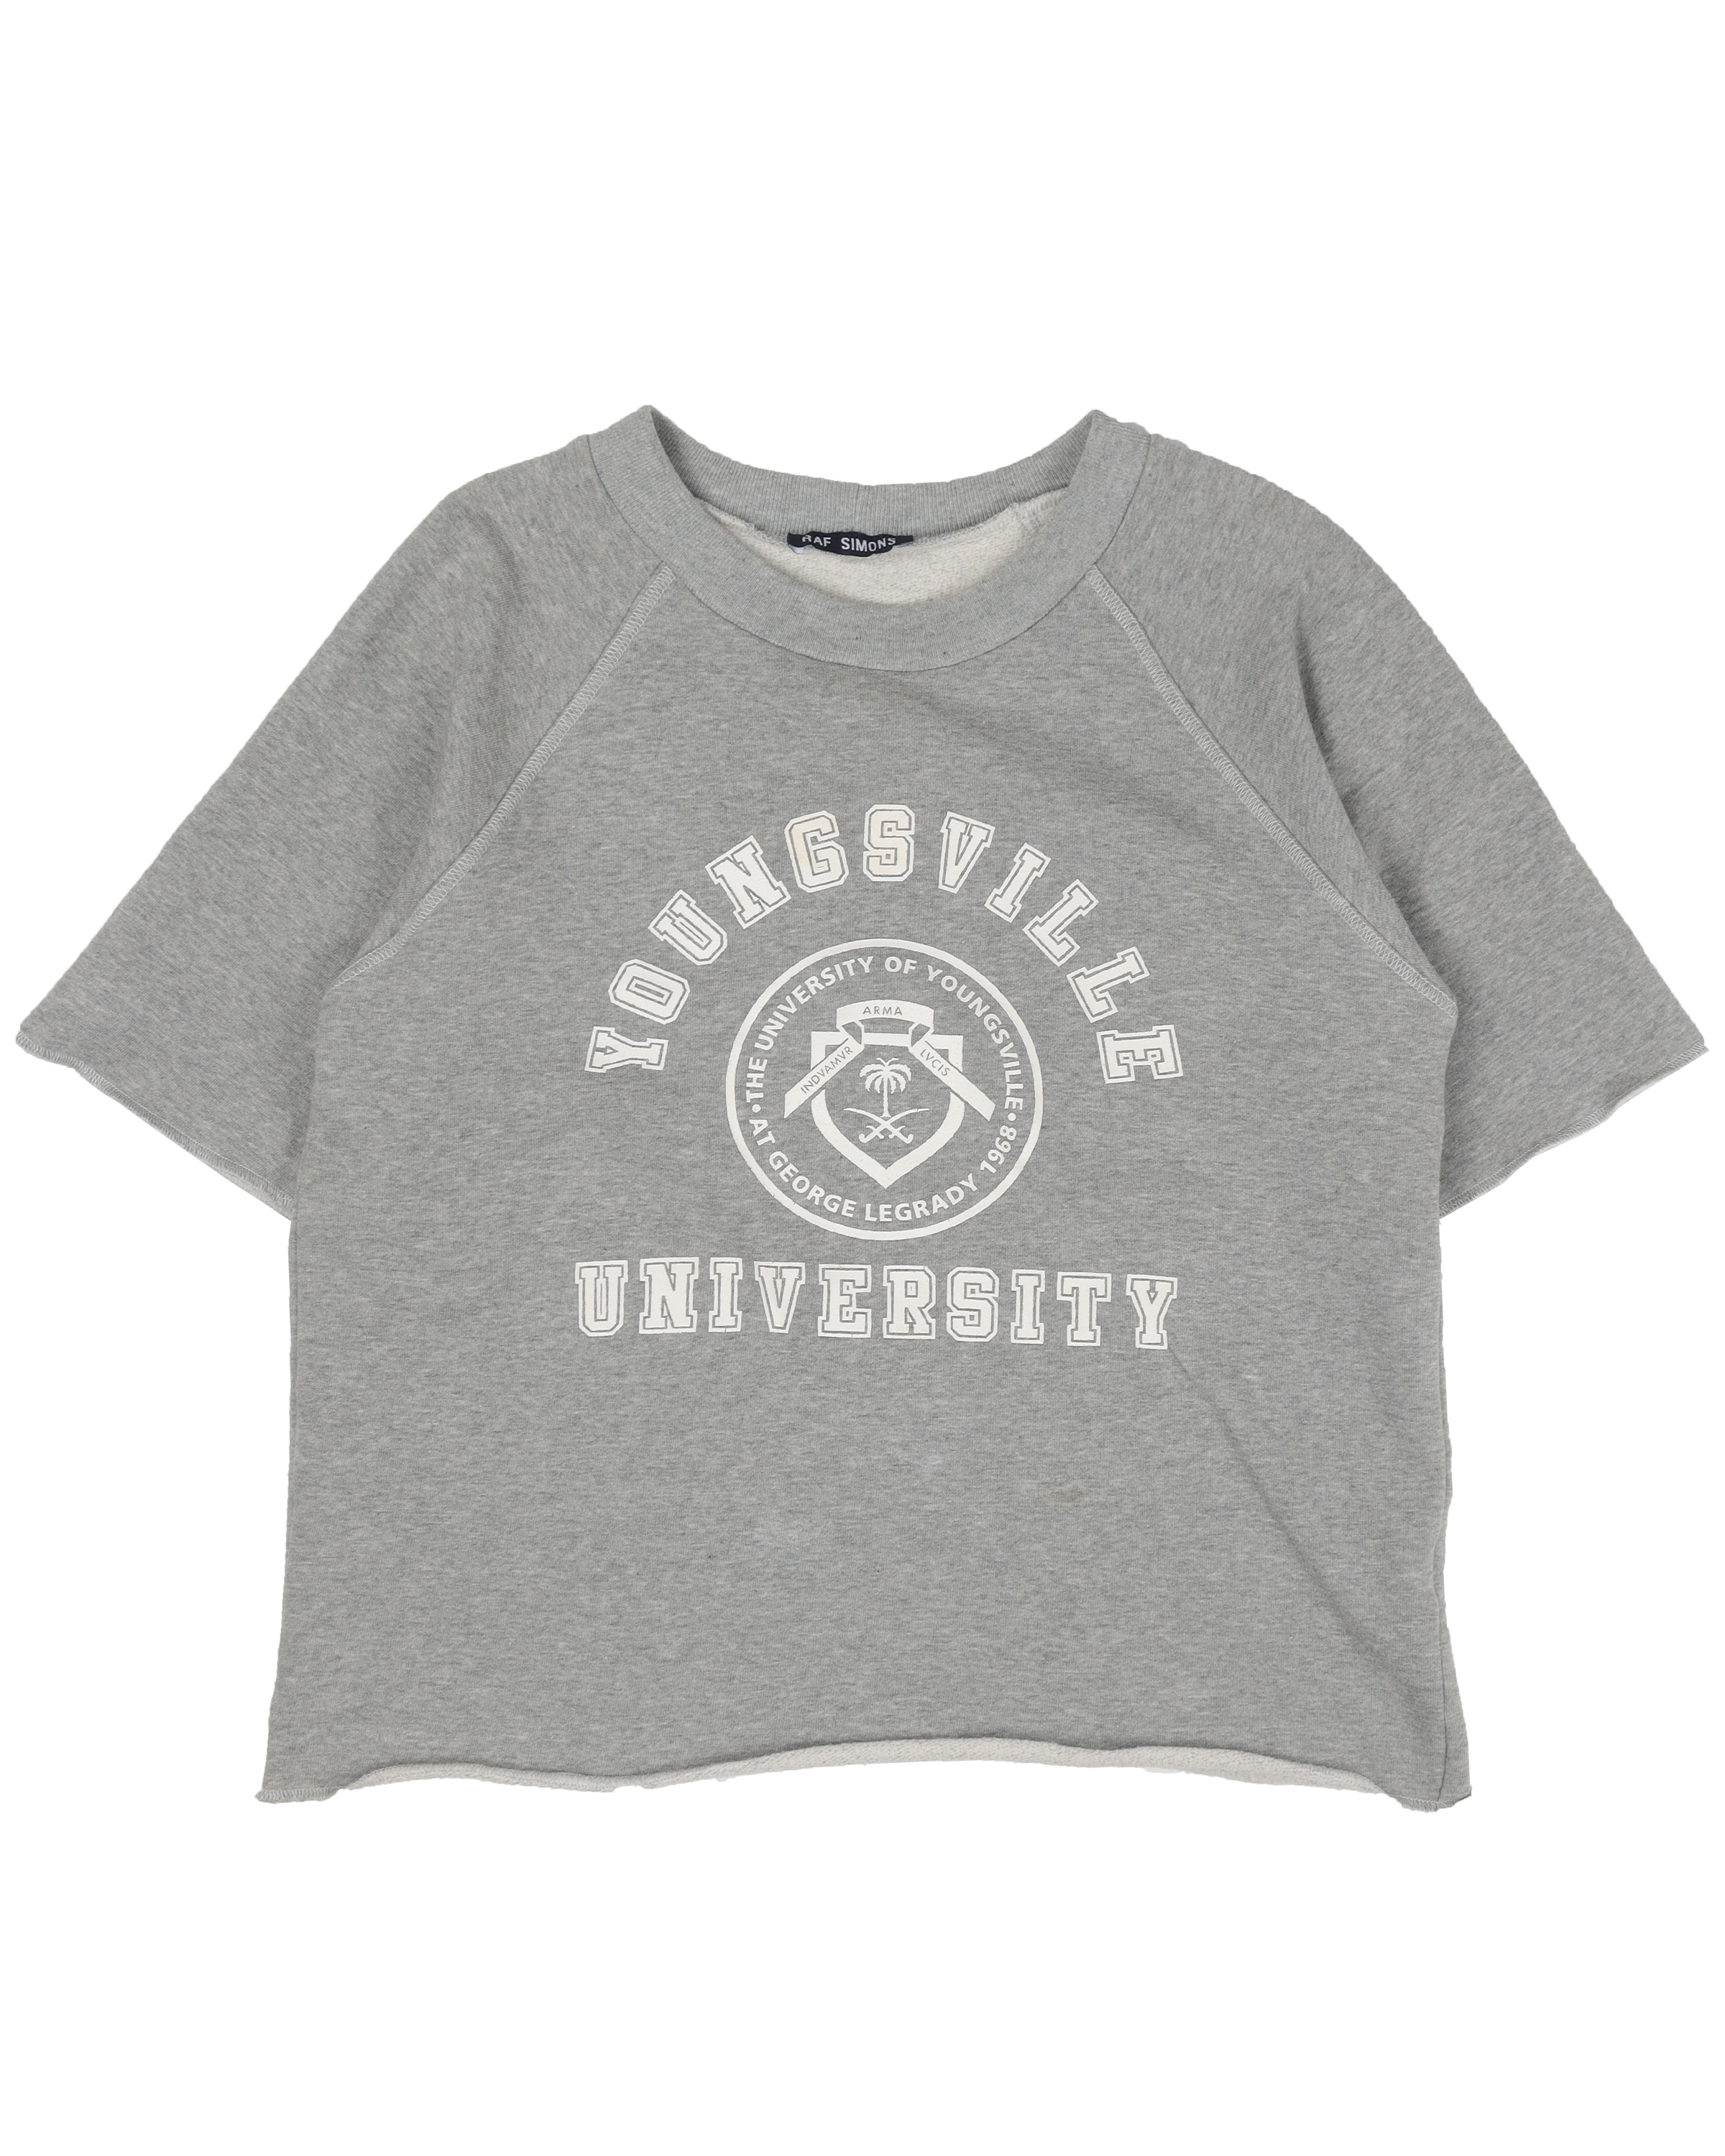 AW97 "Youngsville University" Short Sleeve Sweatshirt